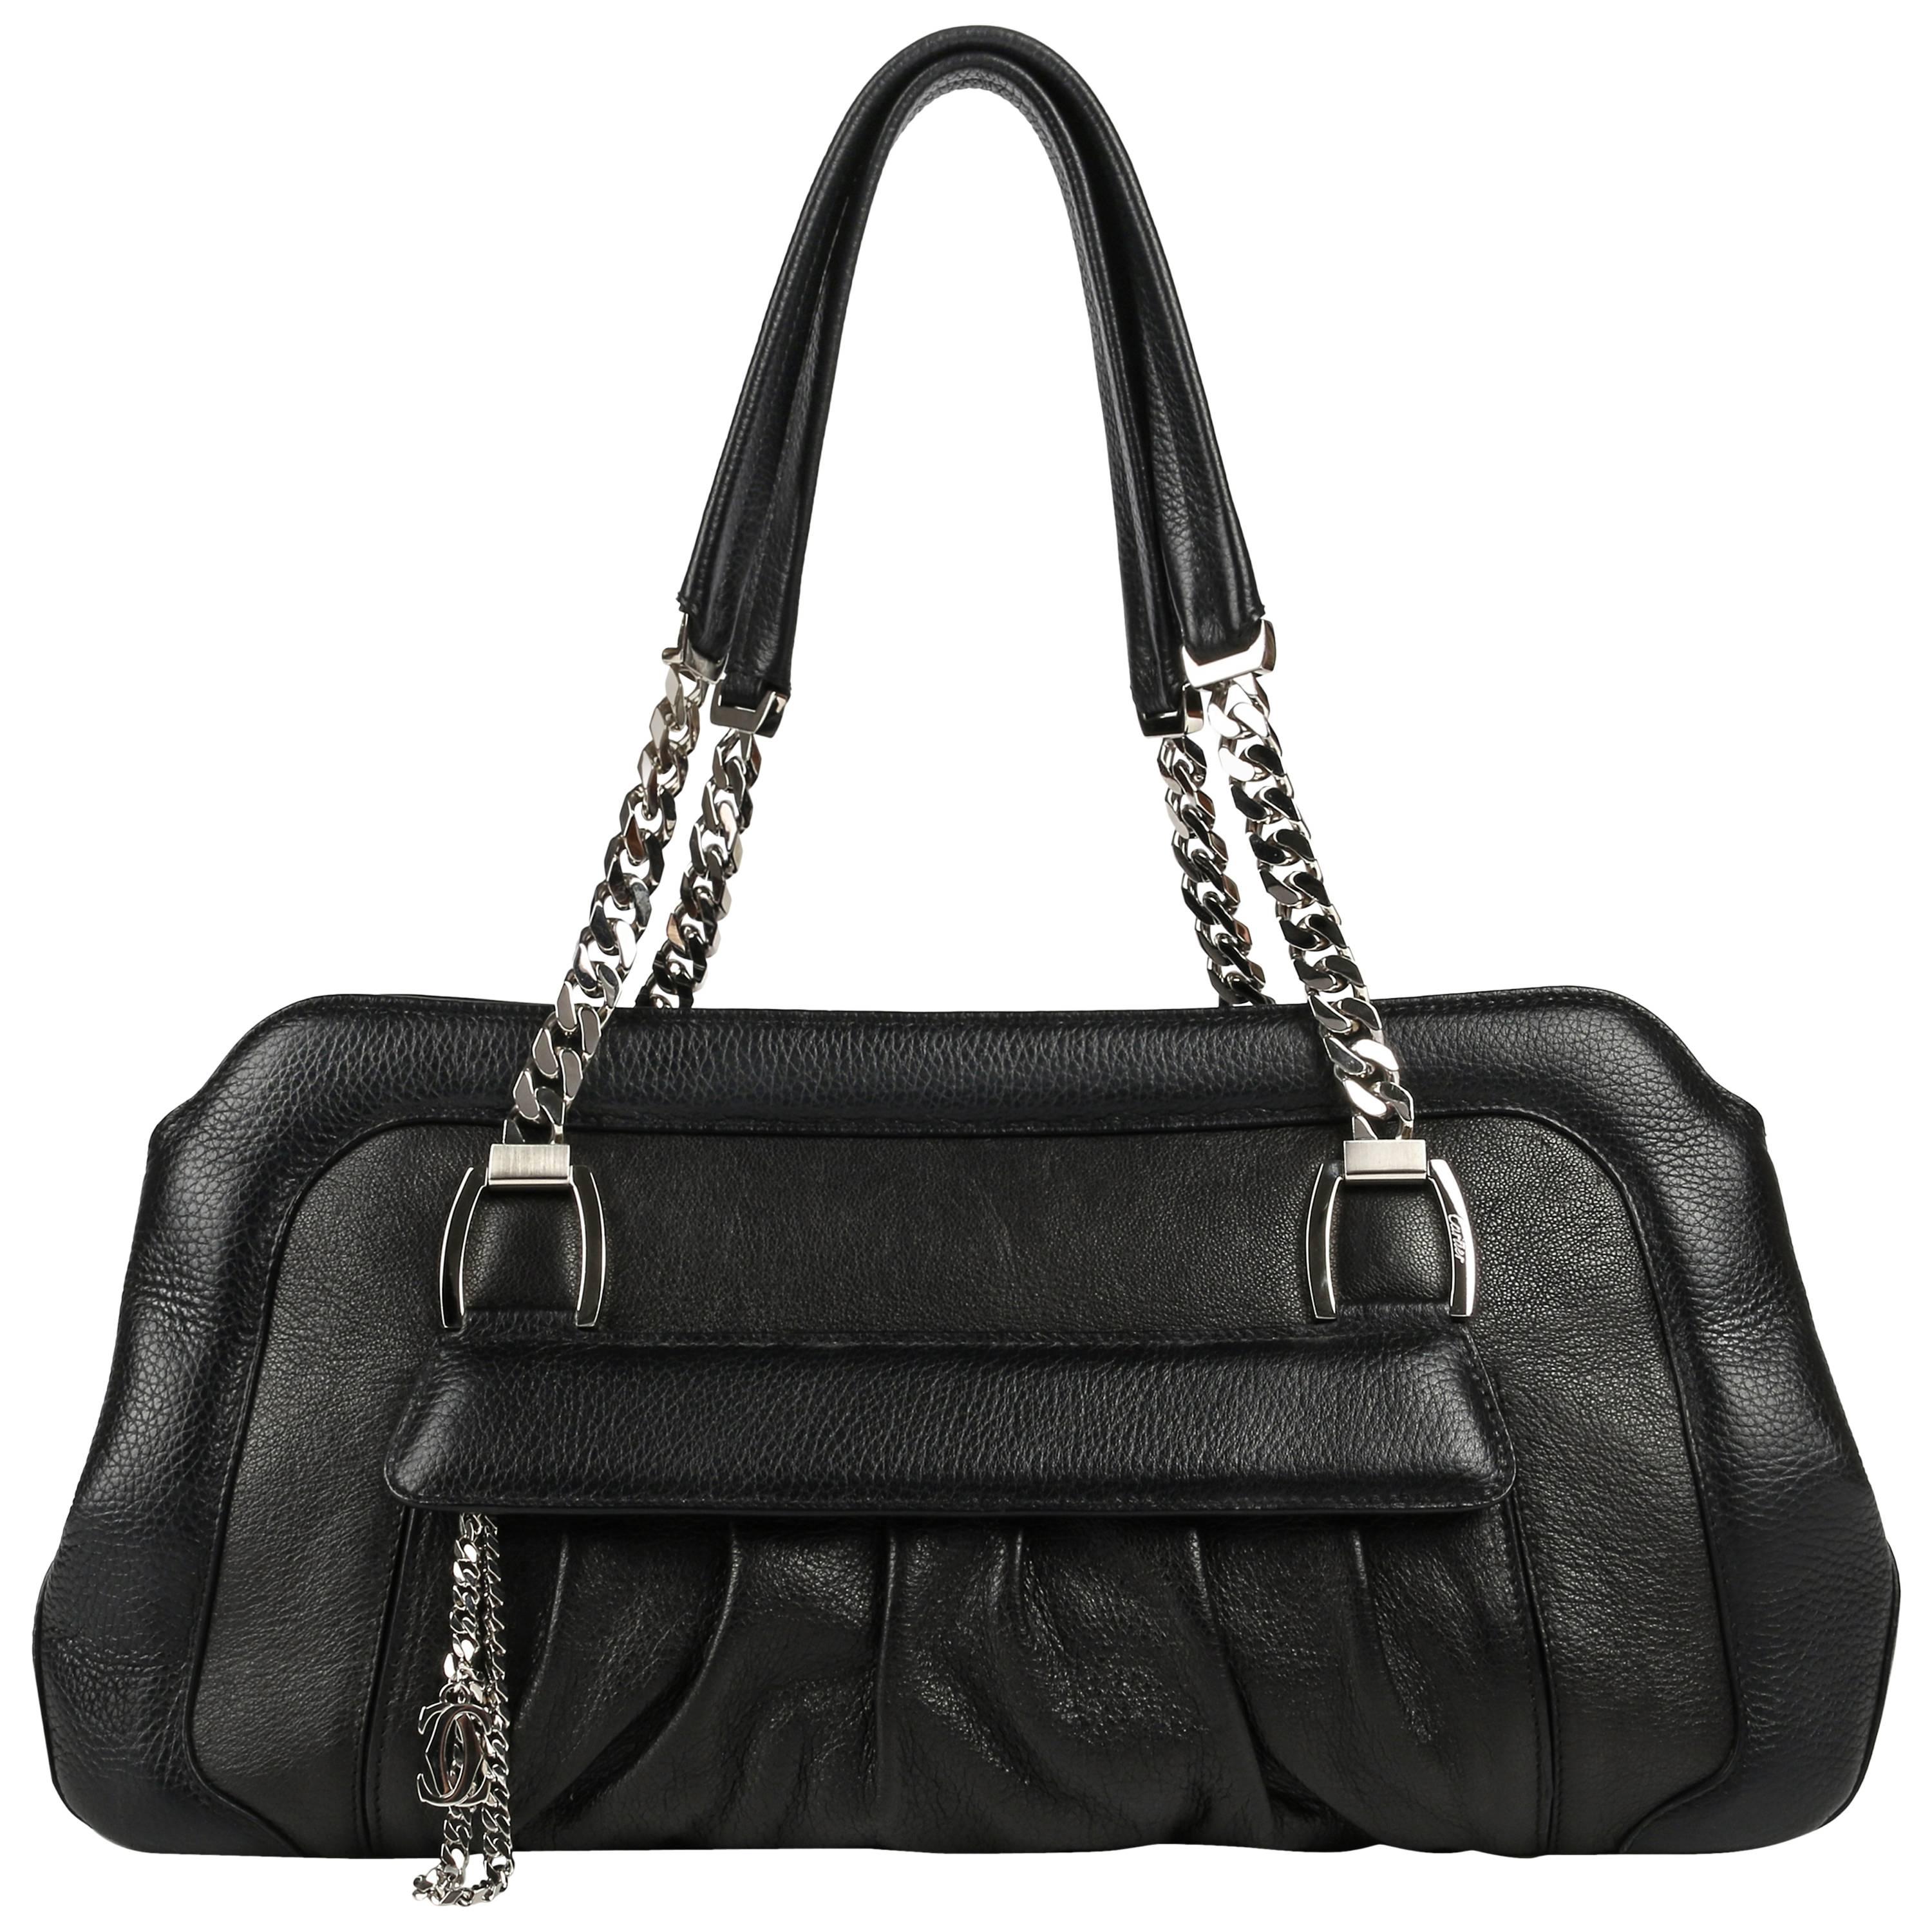 CARTIER Black Textured Leather La Dona Chain Link Satchel Bag Handbag Purse